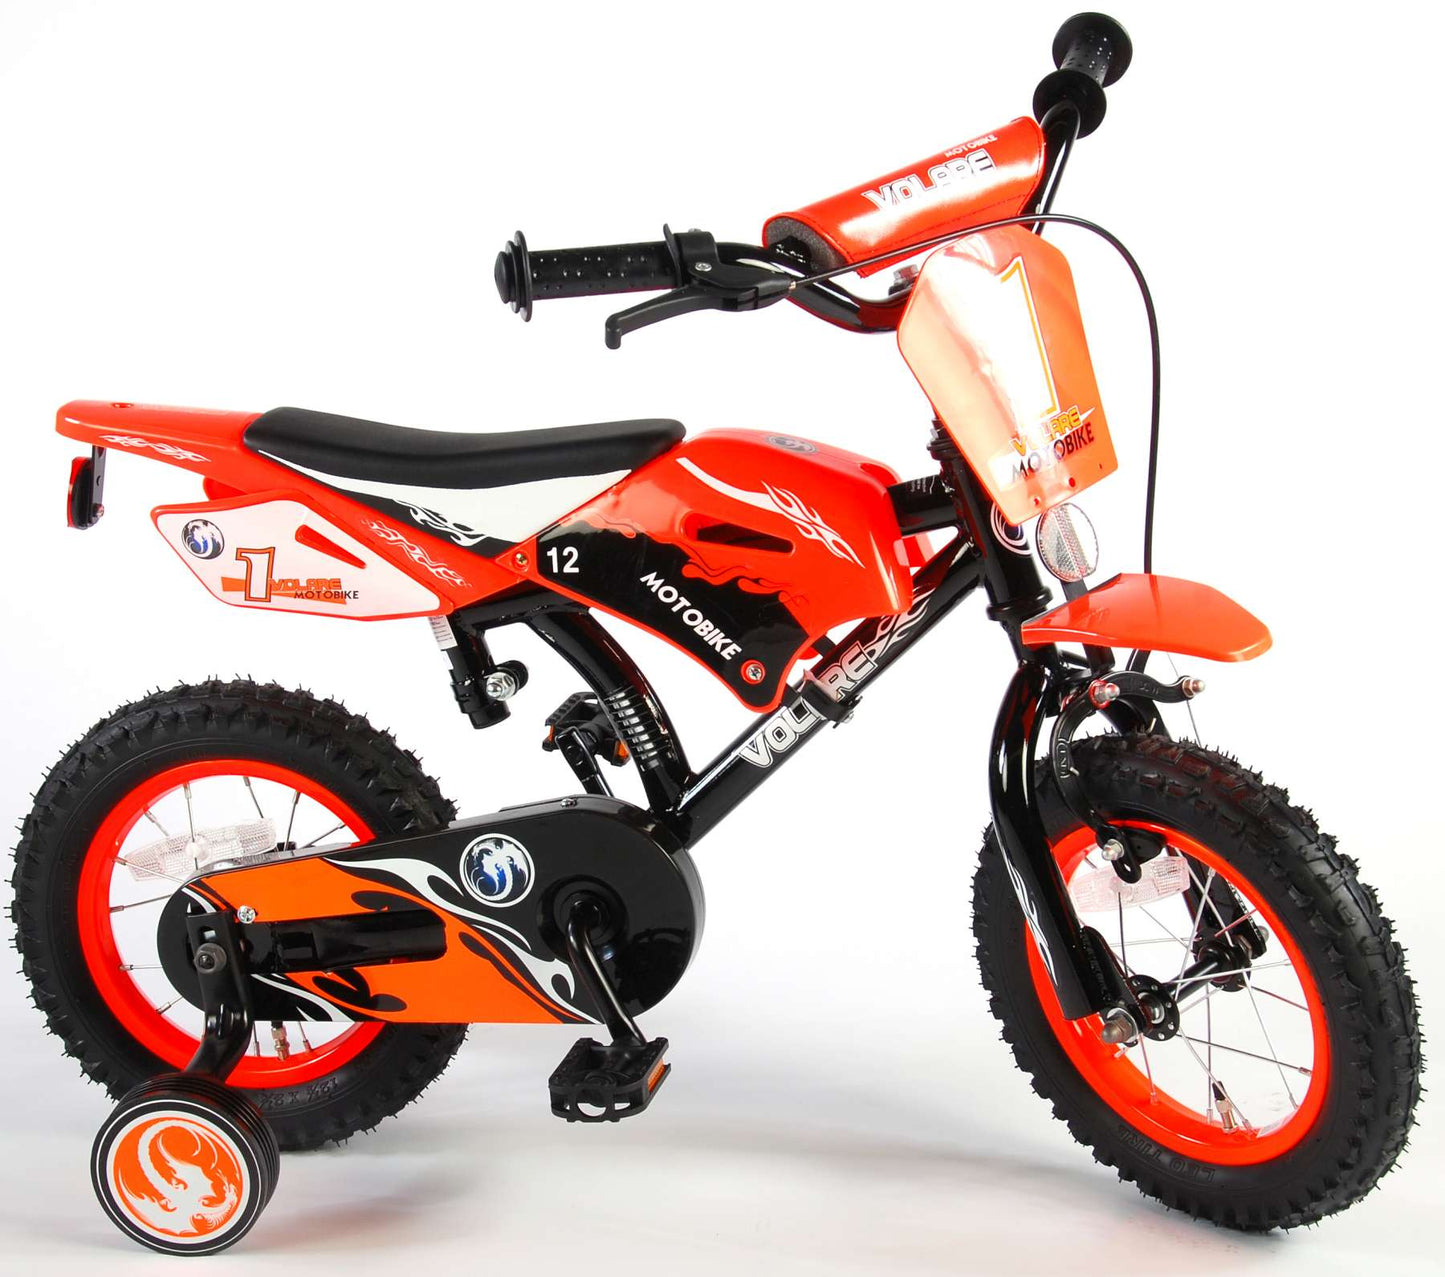 Bicicleta para niños de Motorbike de Vlare - Niños - 12 pulgadas - Naranja - 95% ensamblado